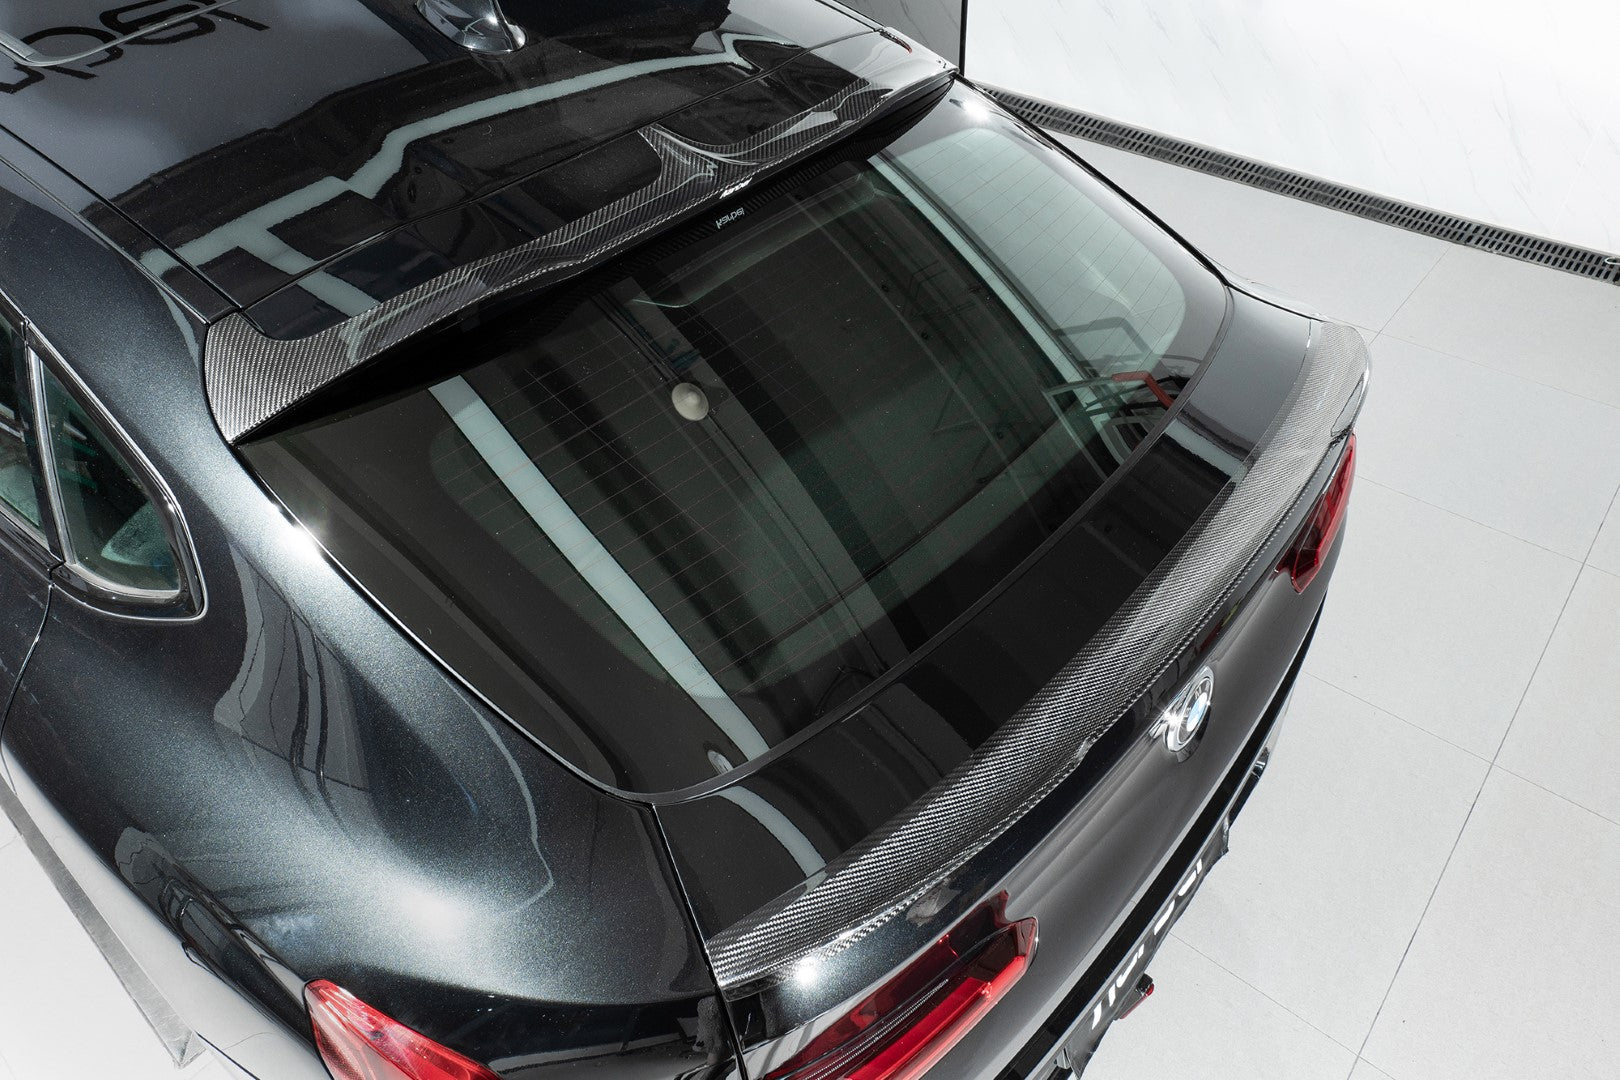 Karbel Carbon Dry Carbon Fiber Rear Roof Spoiler for BMW X4 & X4M & X4MC G02/F98 2019-ON